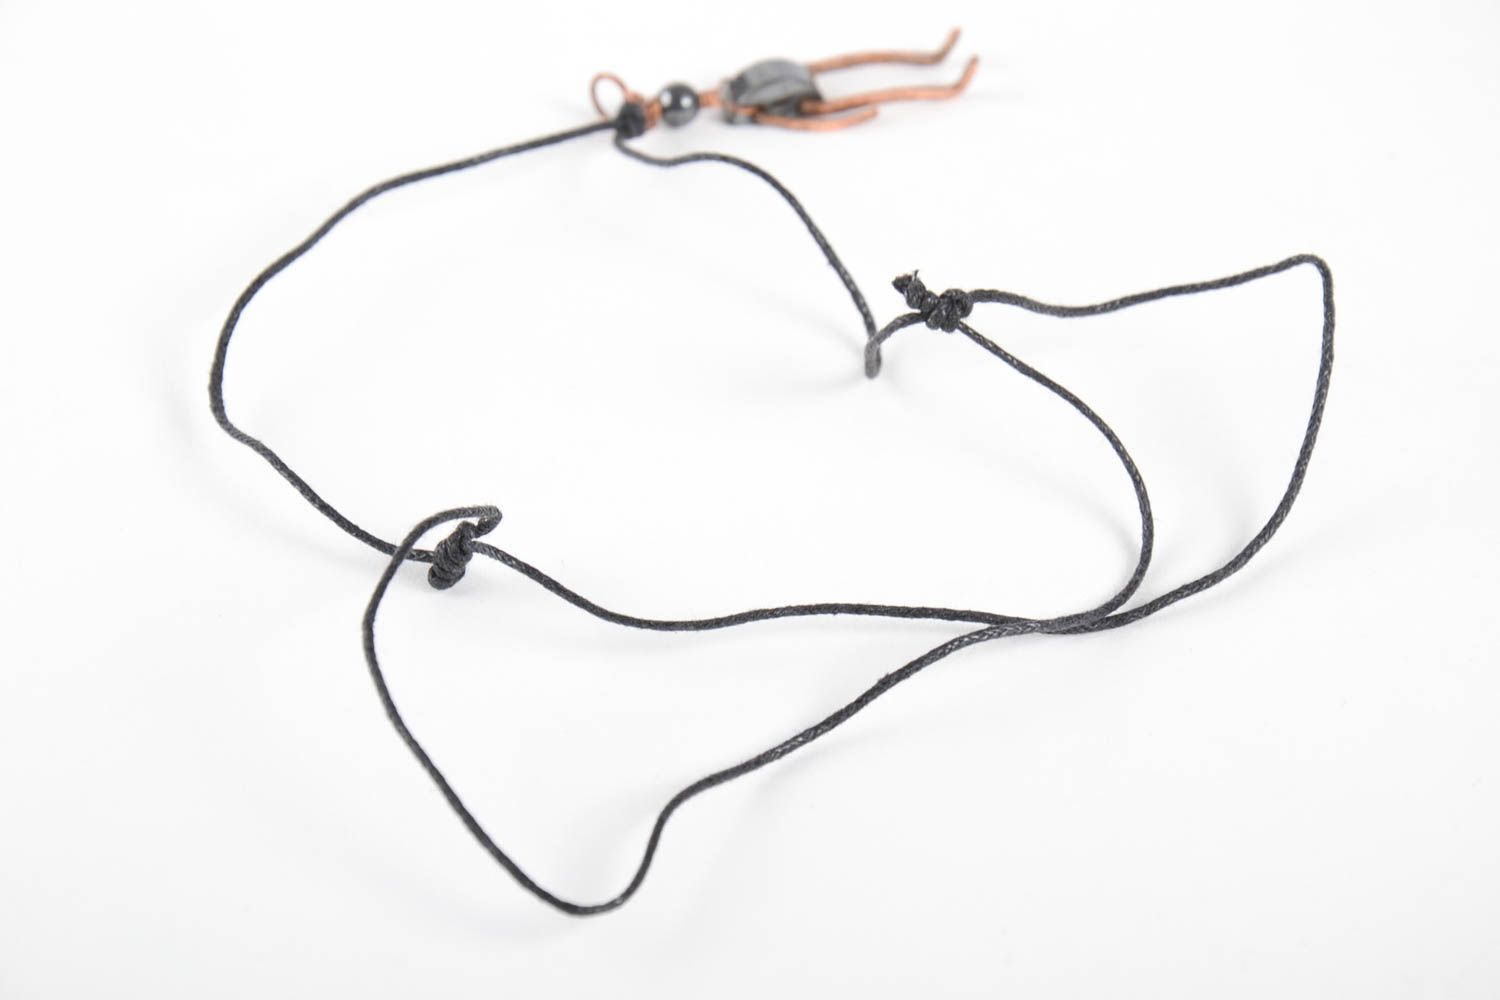 Handmade pendant wire wrap pendant unusual accessory designer jewelry photo 5